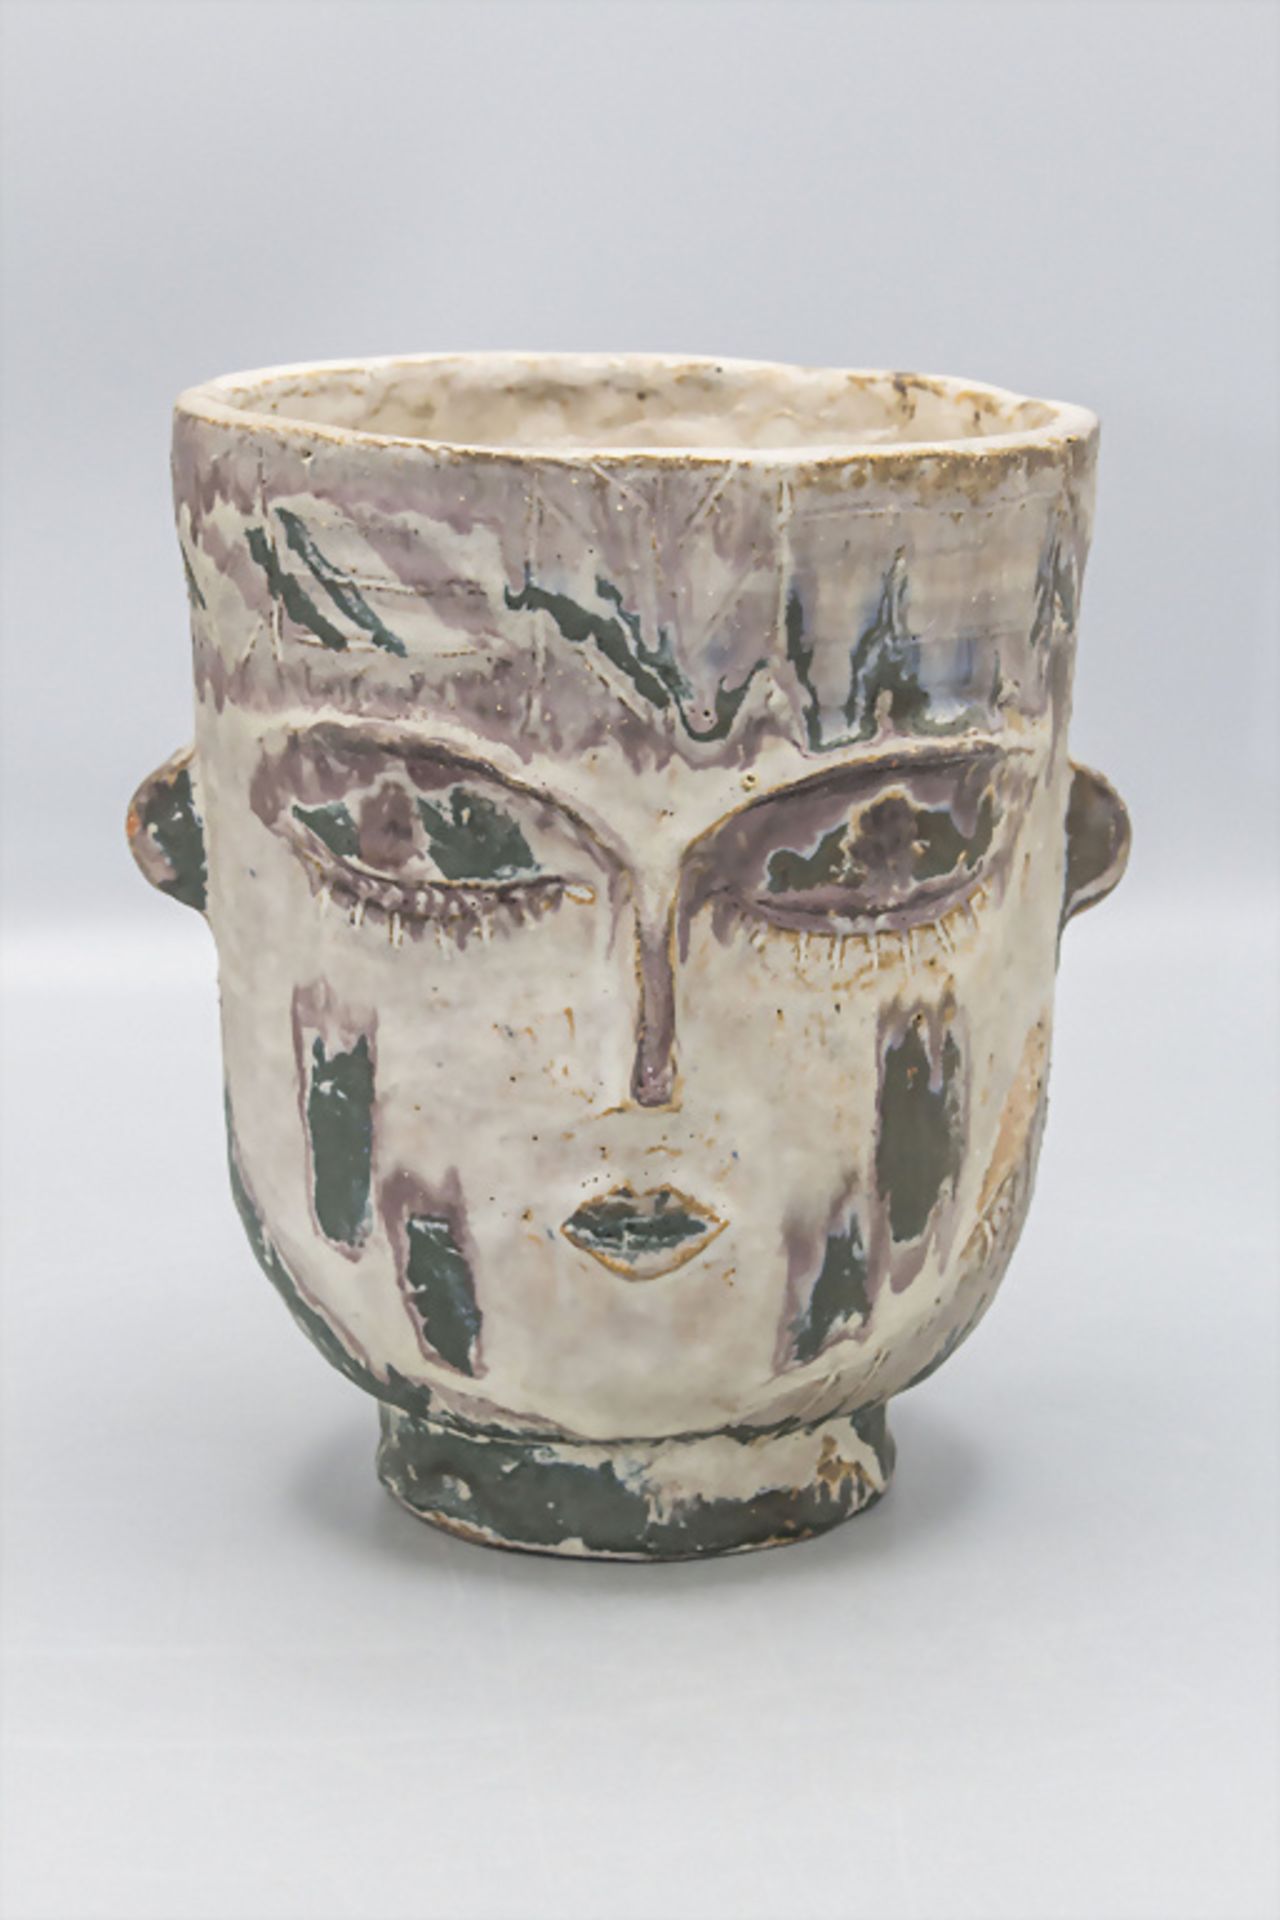 Keramikvase mit Gesichtern / A ceramic vase with faces, 1959